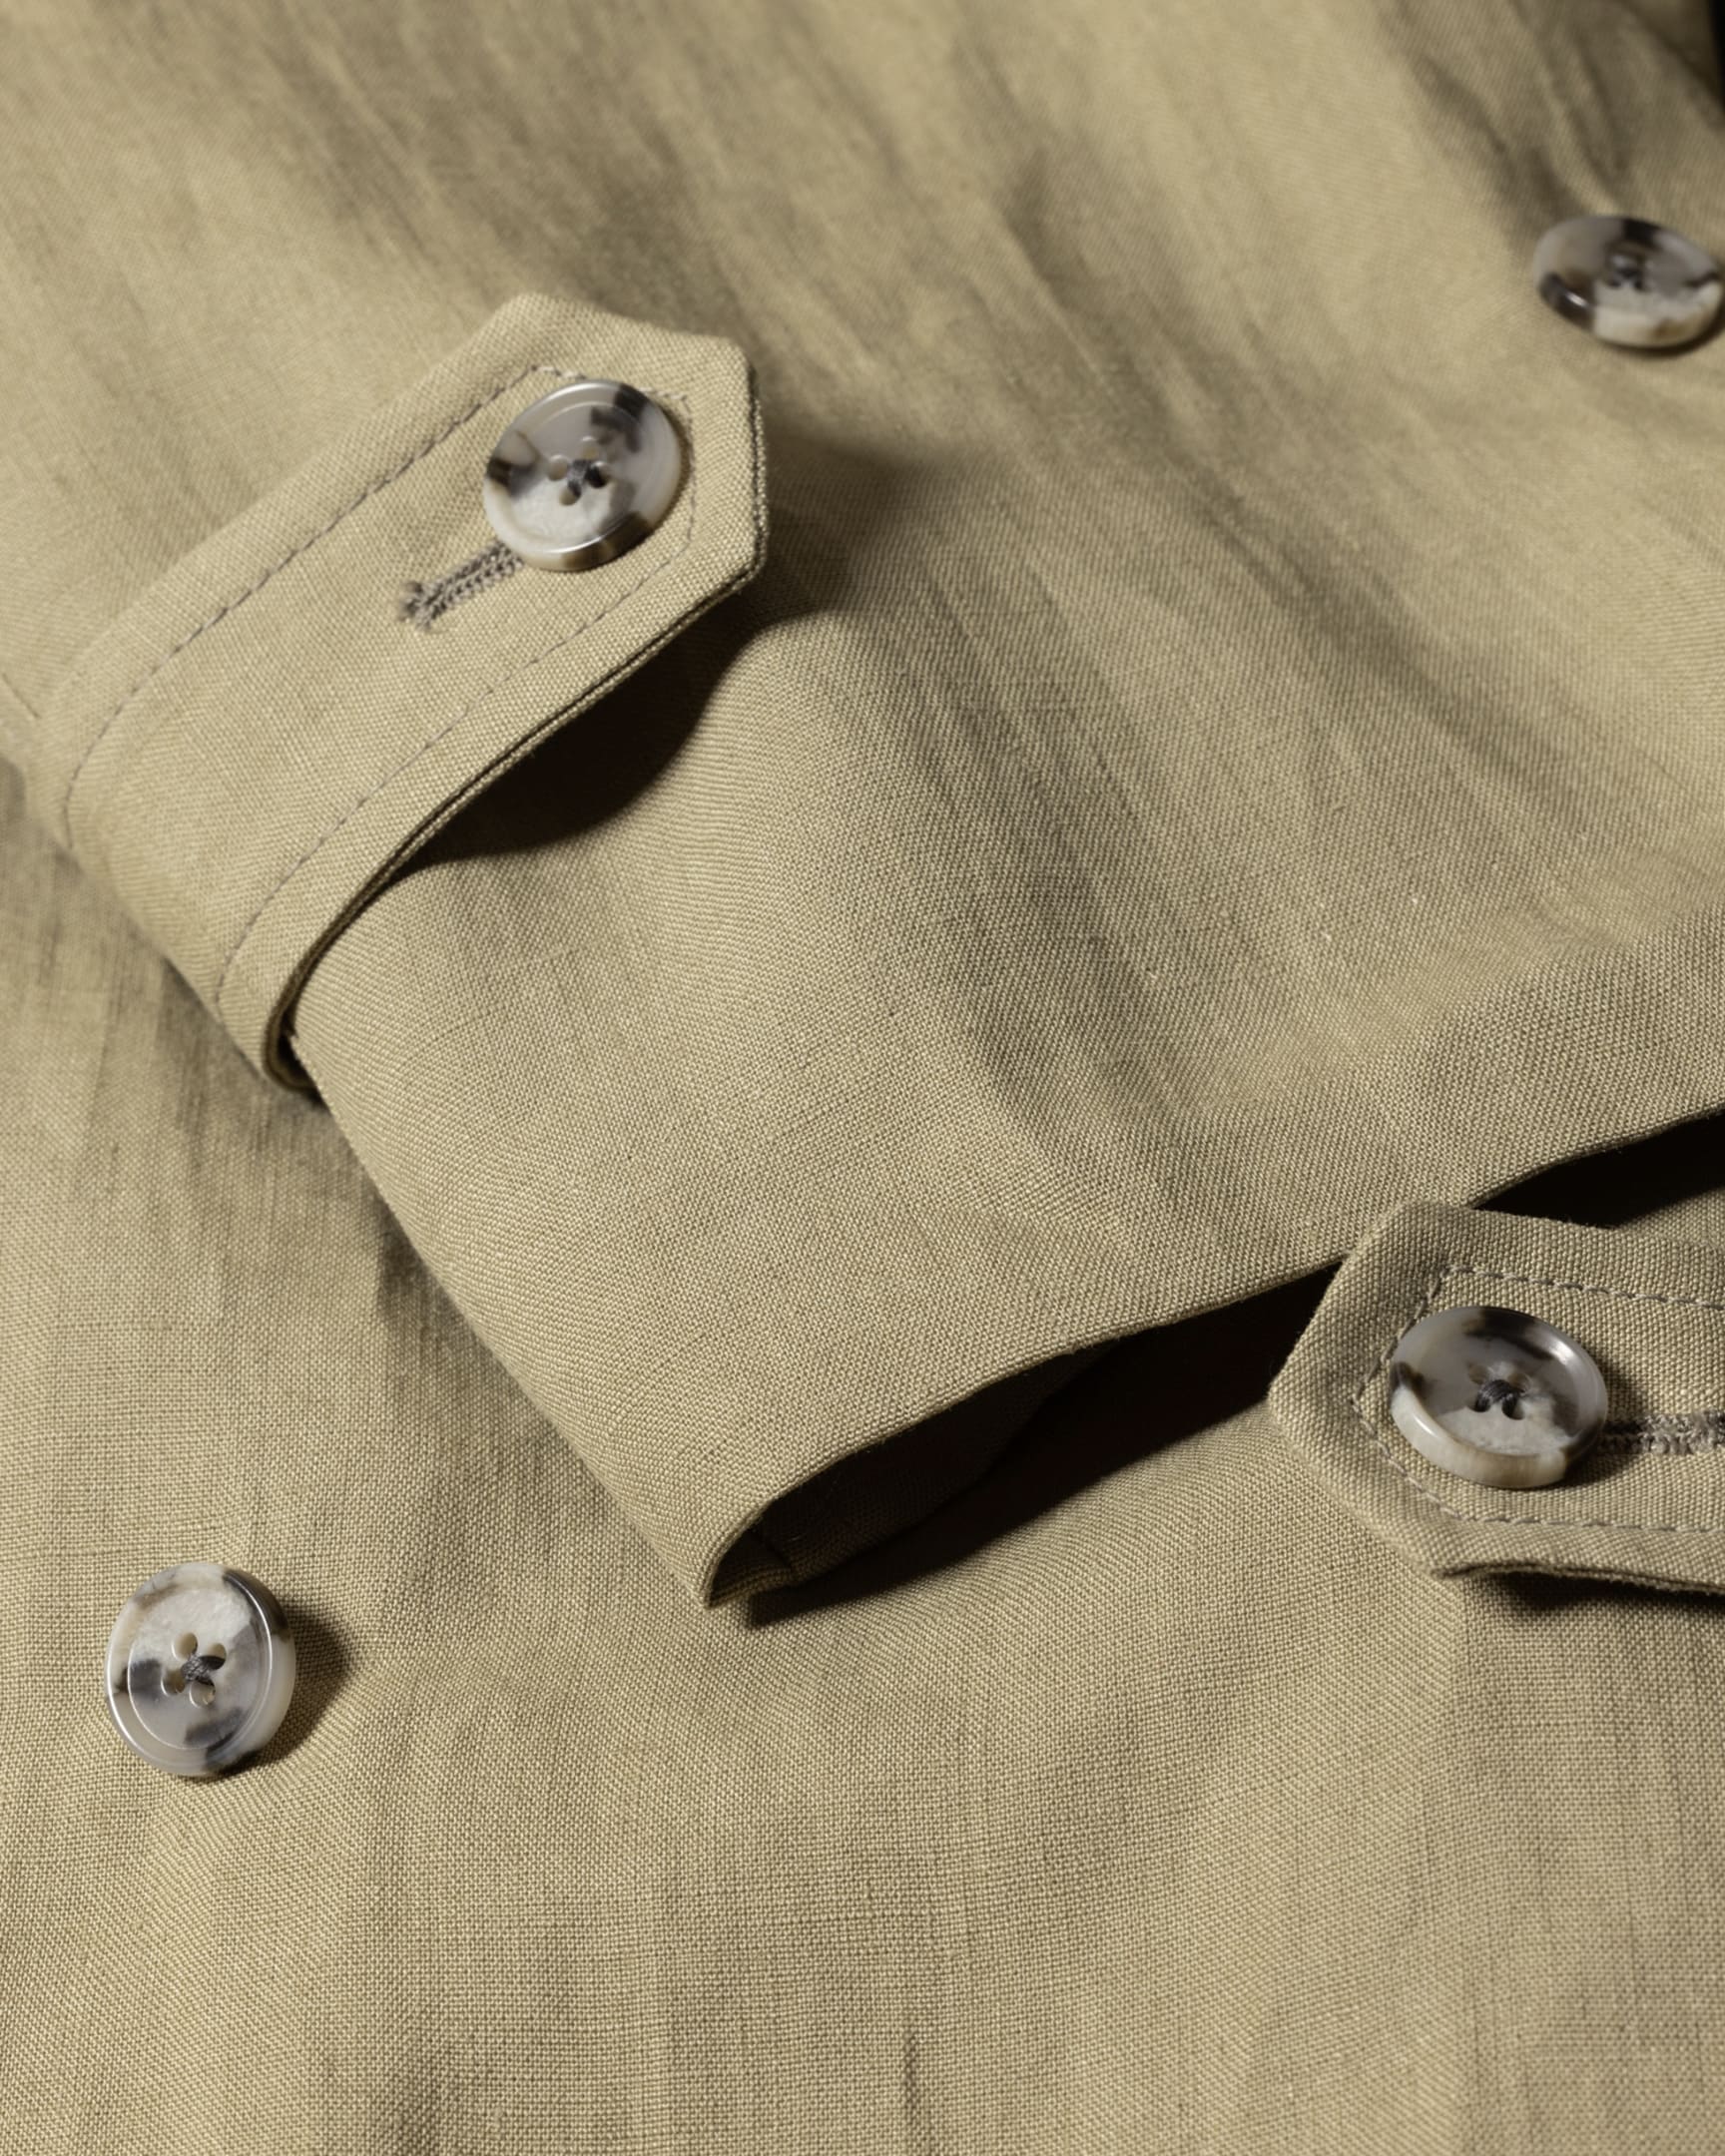 Detail View - Women's Pale Khaki Linen Cargo Trousers Paul Smith